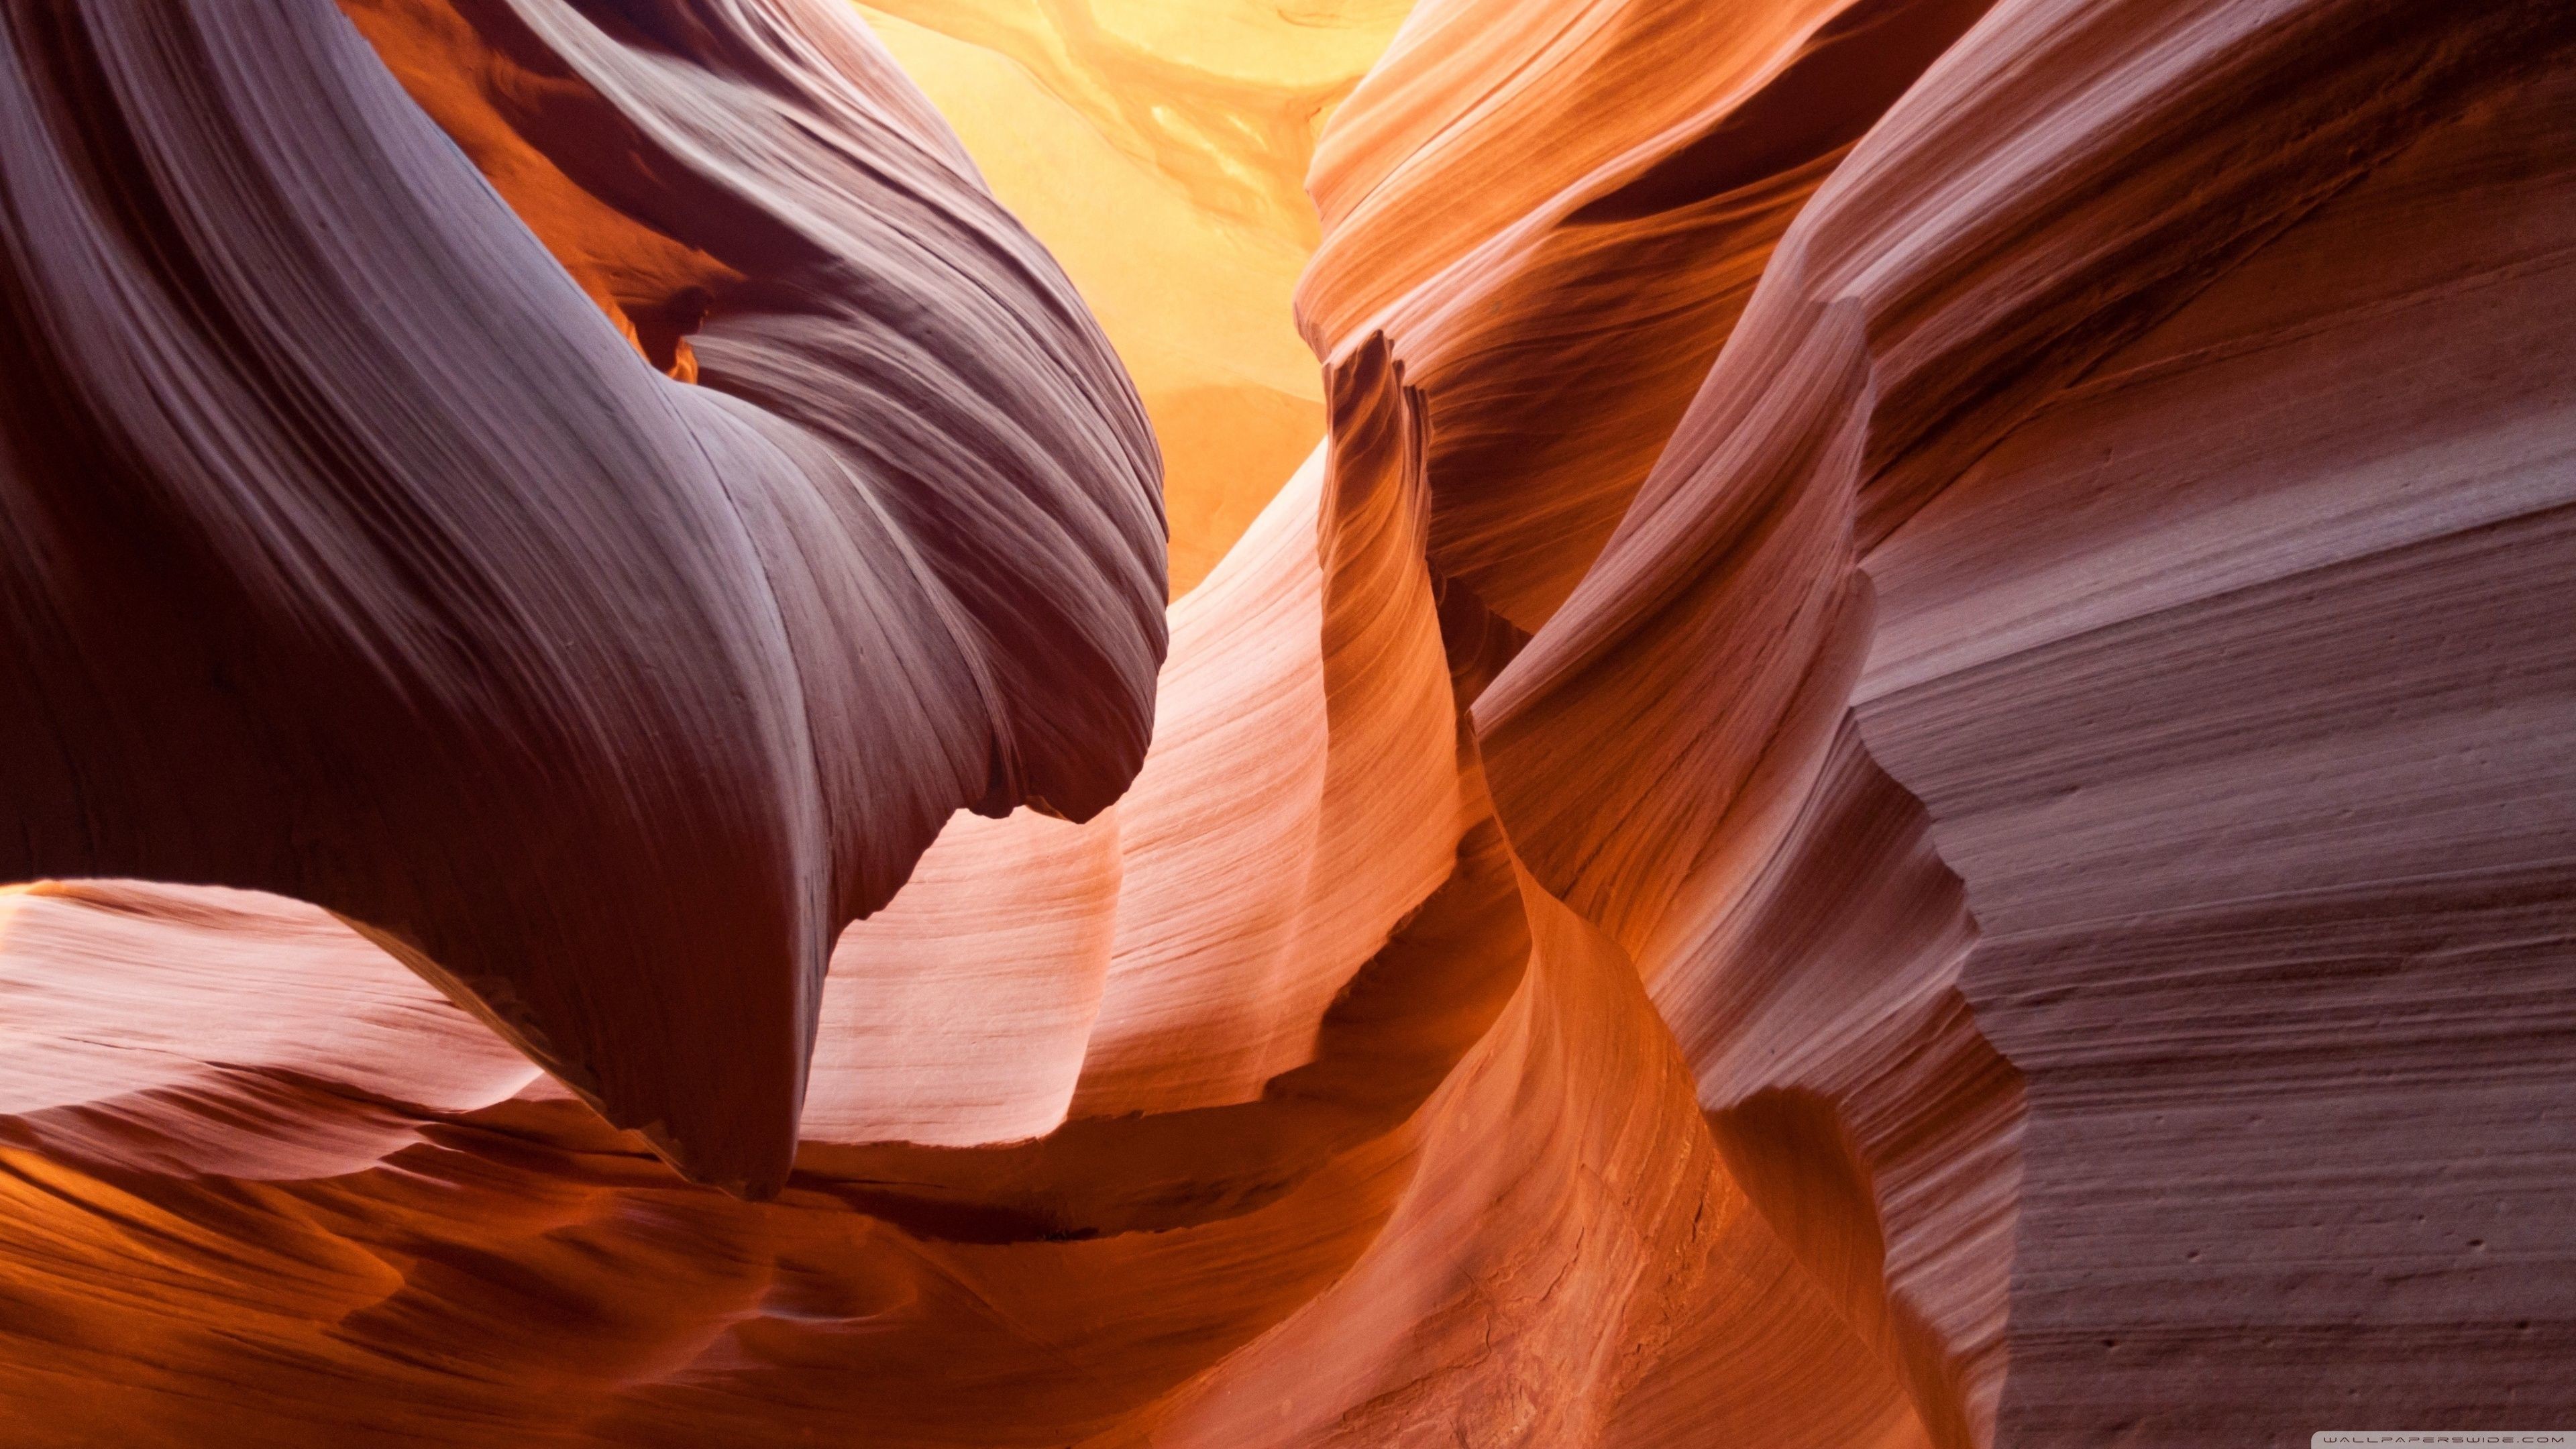 3840x2160 1920x1080 23 Stunning HD Antelope Canyon Wallpapers - HDWallSource.com">